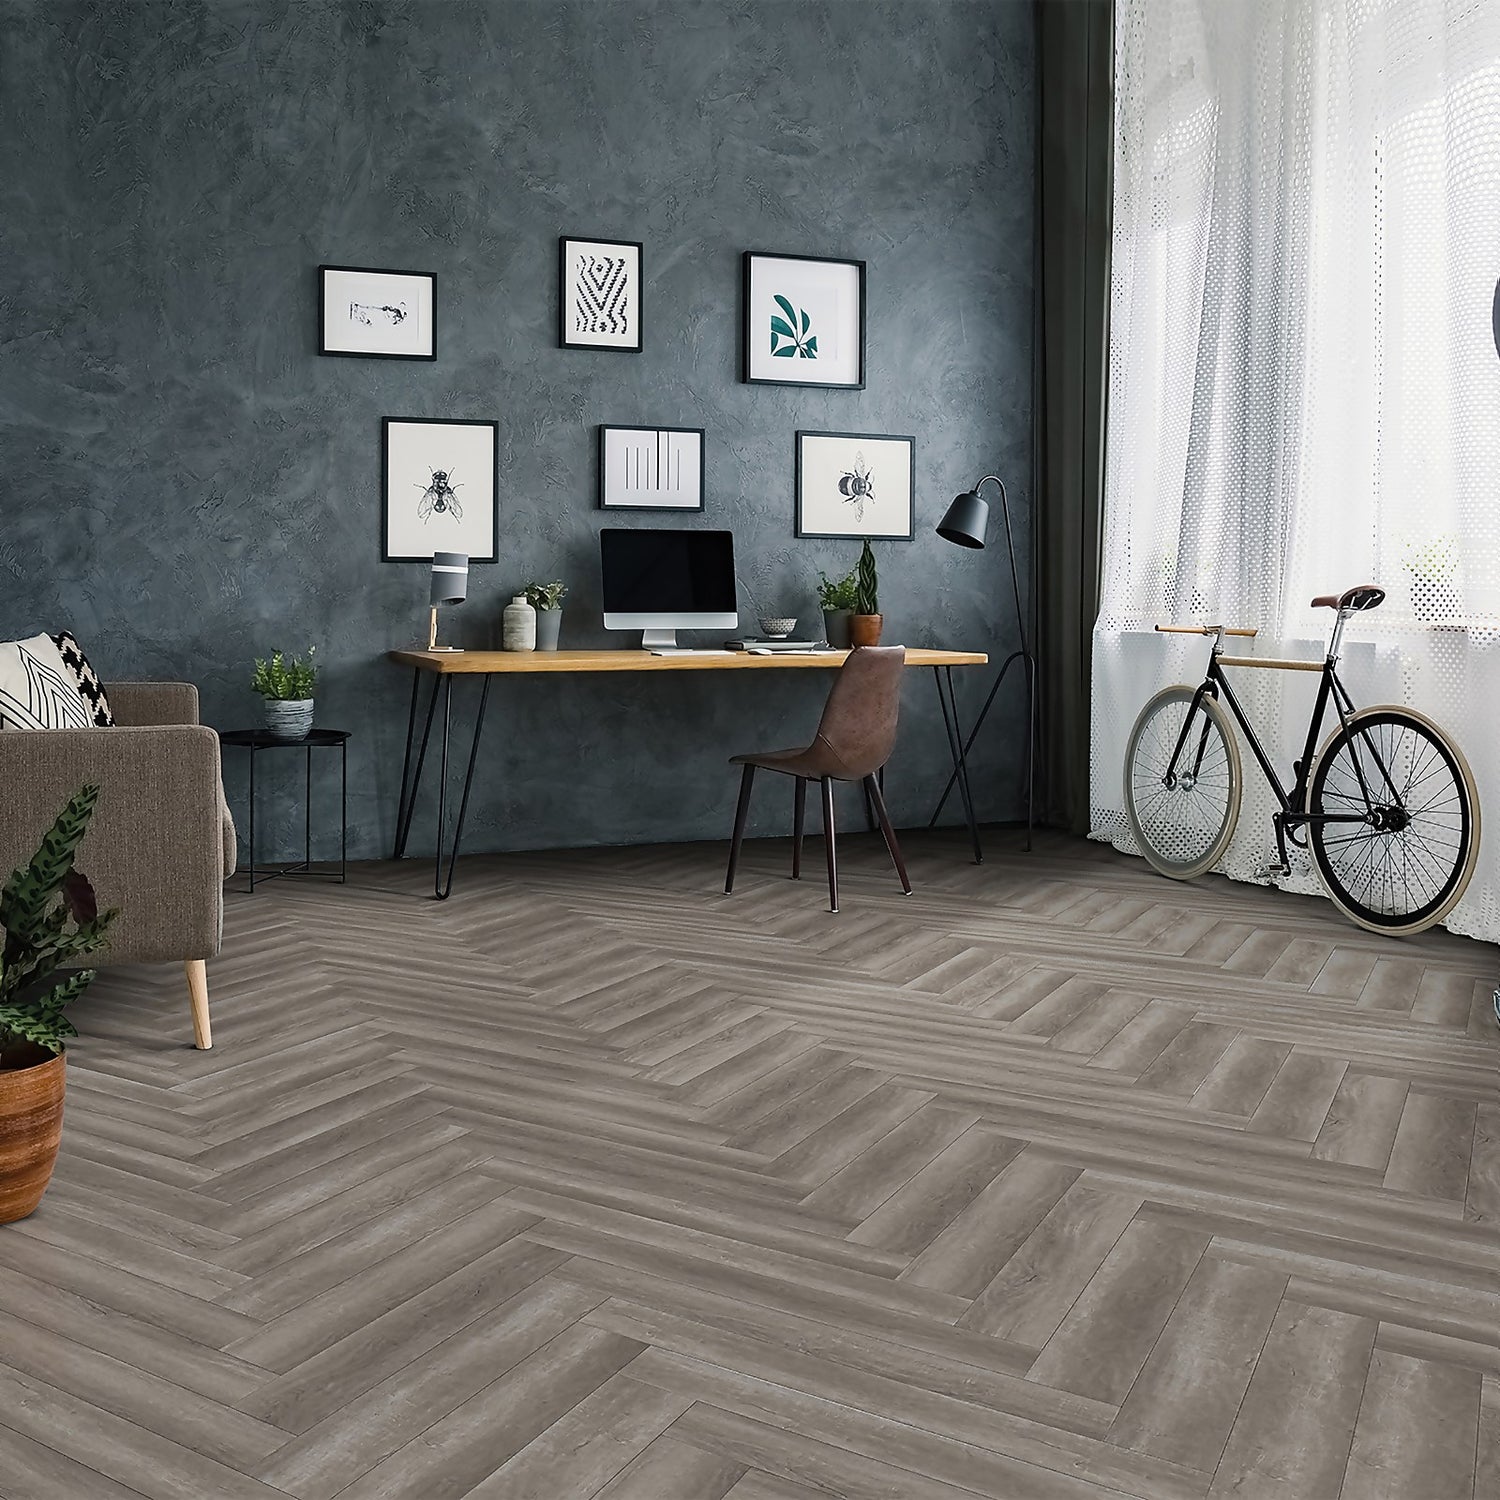 Kraus Herringbone Luxury Vinyl Floor Tile Sample Harpsden Grey Homebase